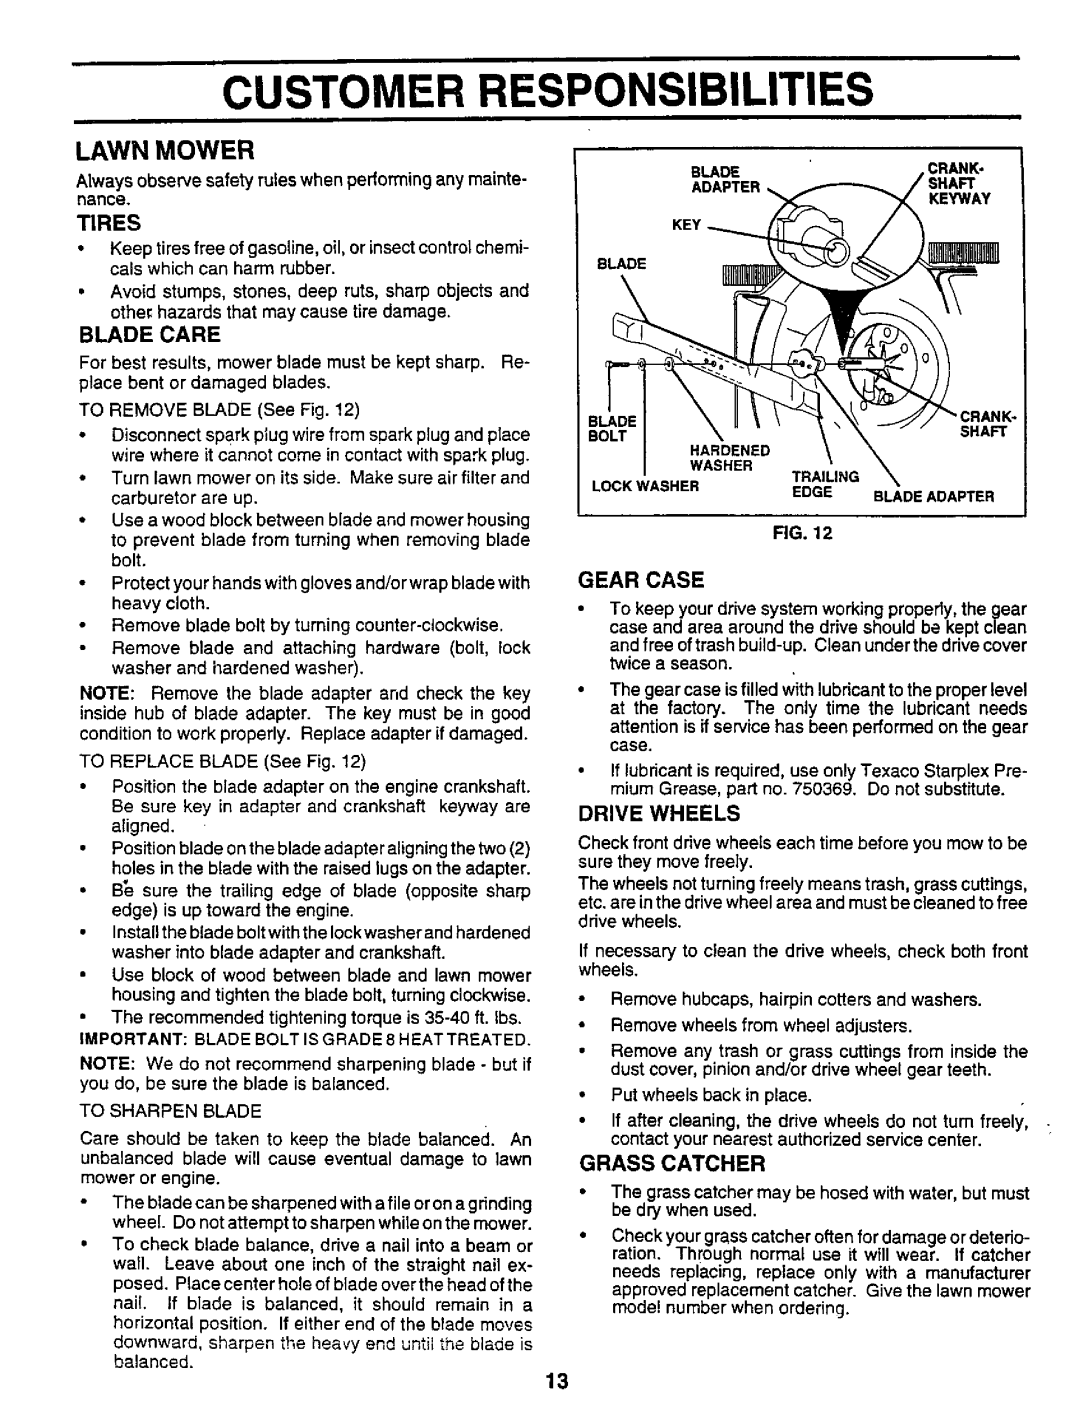 Sears 917.373981 owner manual Customer Responsibilities, Gear Case, Drive Wheels, Grass Catcher 